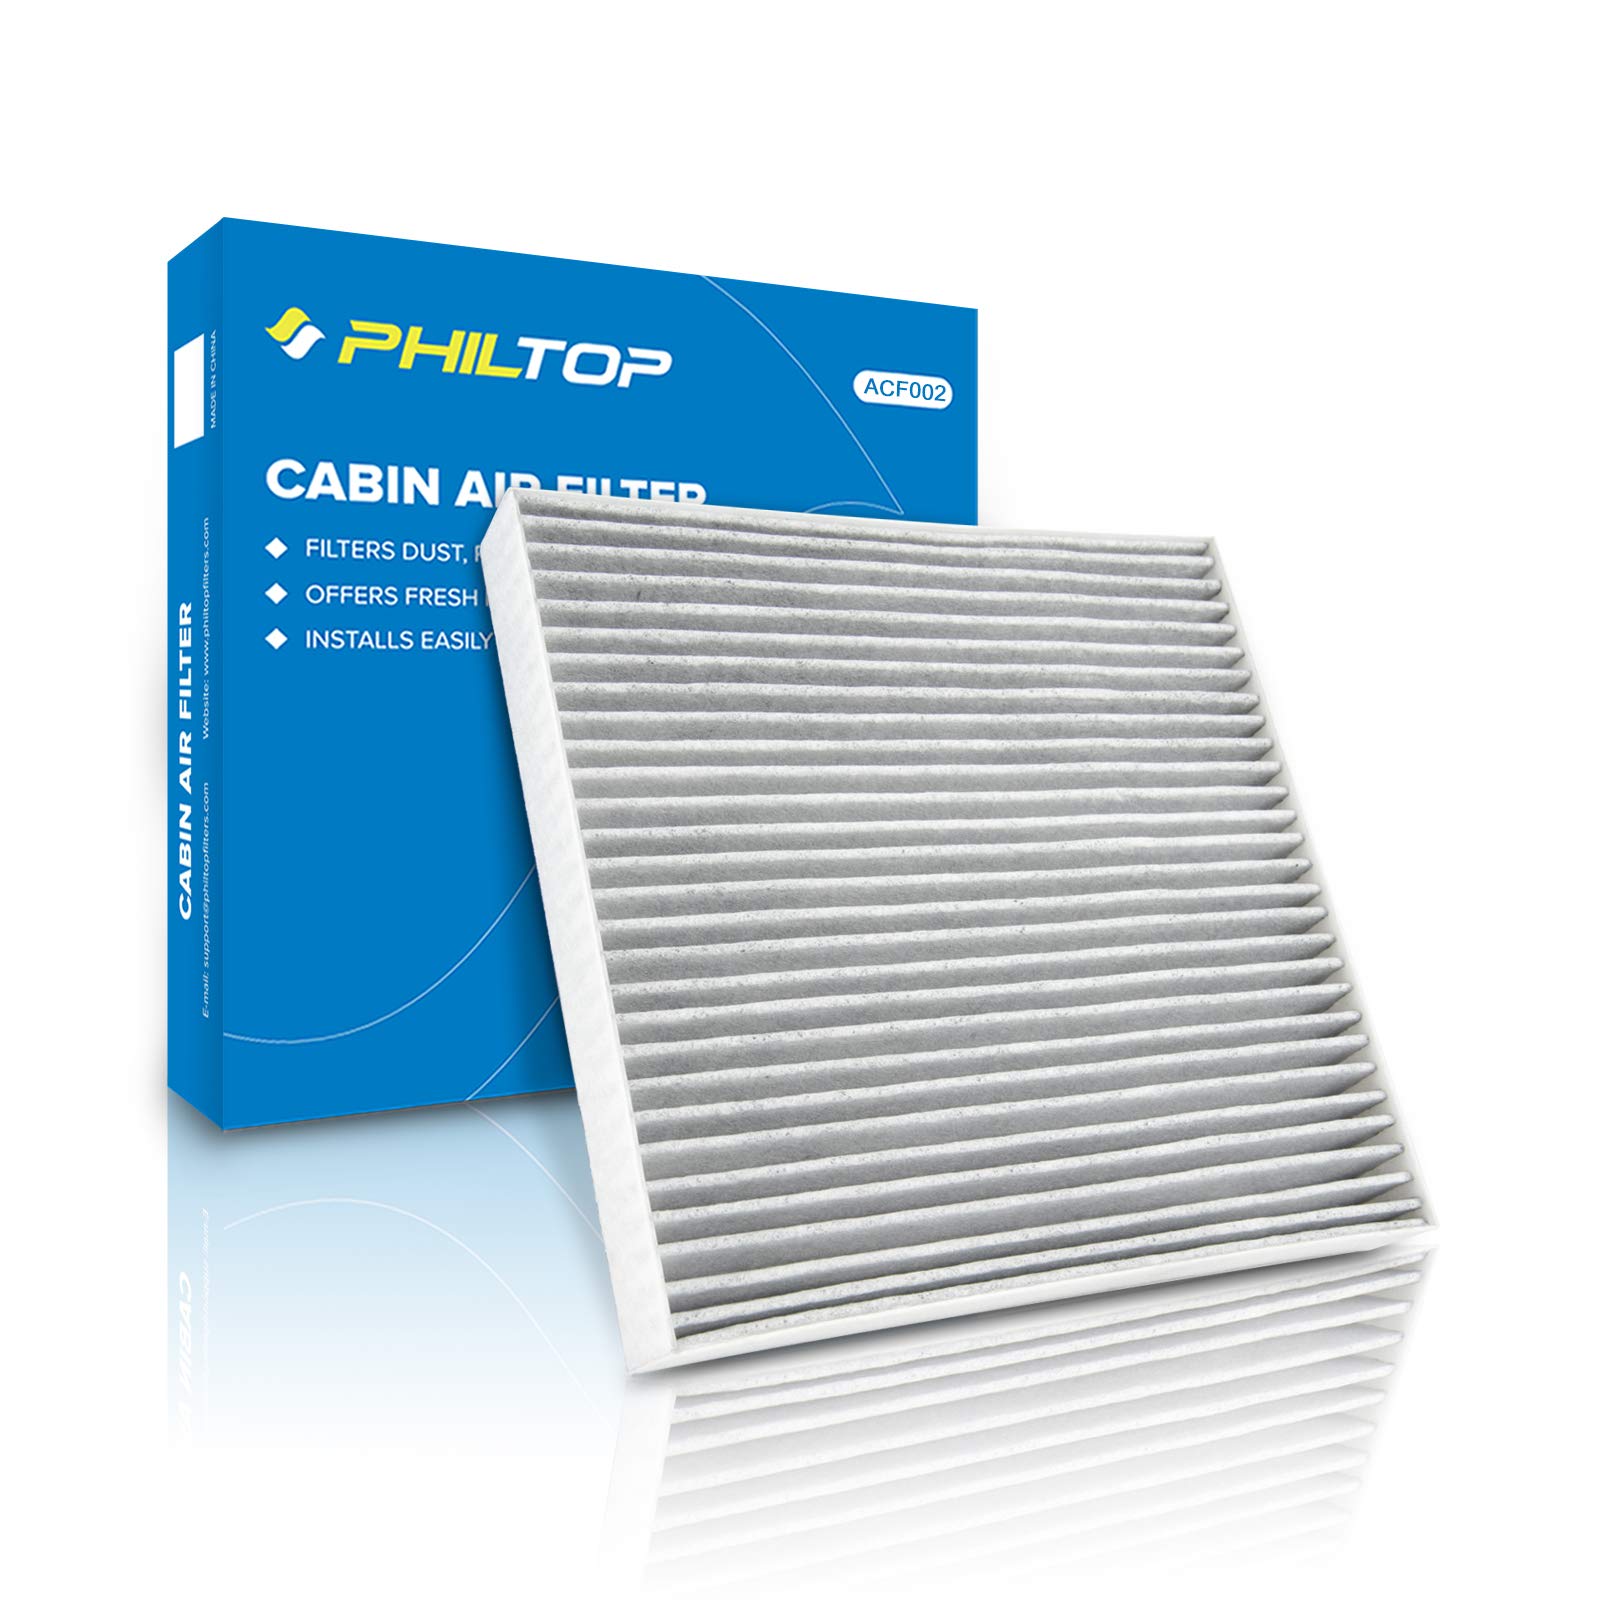 PHILTOP Premium Cabin Air Filter, Replacement for CF10134, Accord, Ridgeline, Civic, Pilot, Odyssey, CR-V, Passport, Crosstour, 